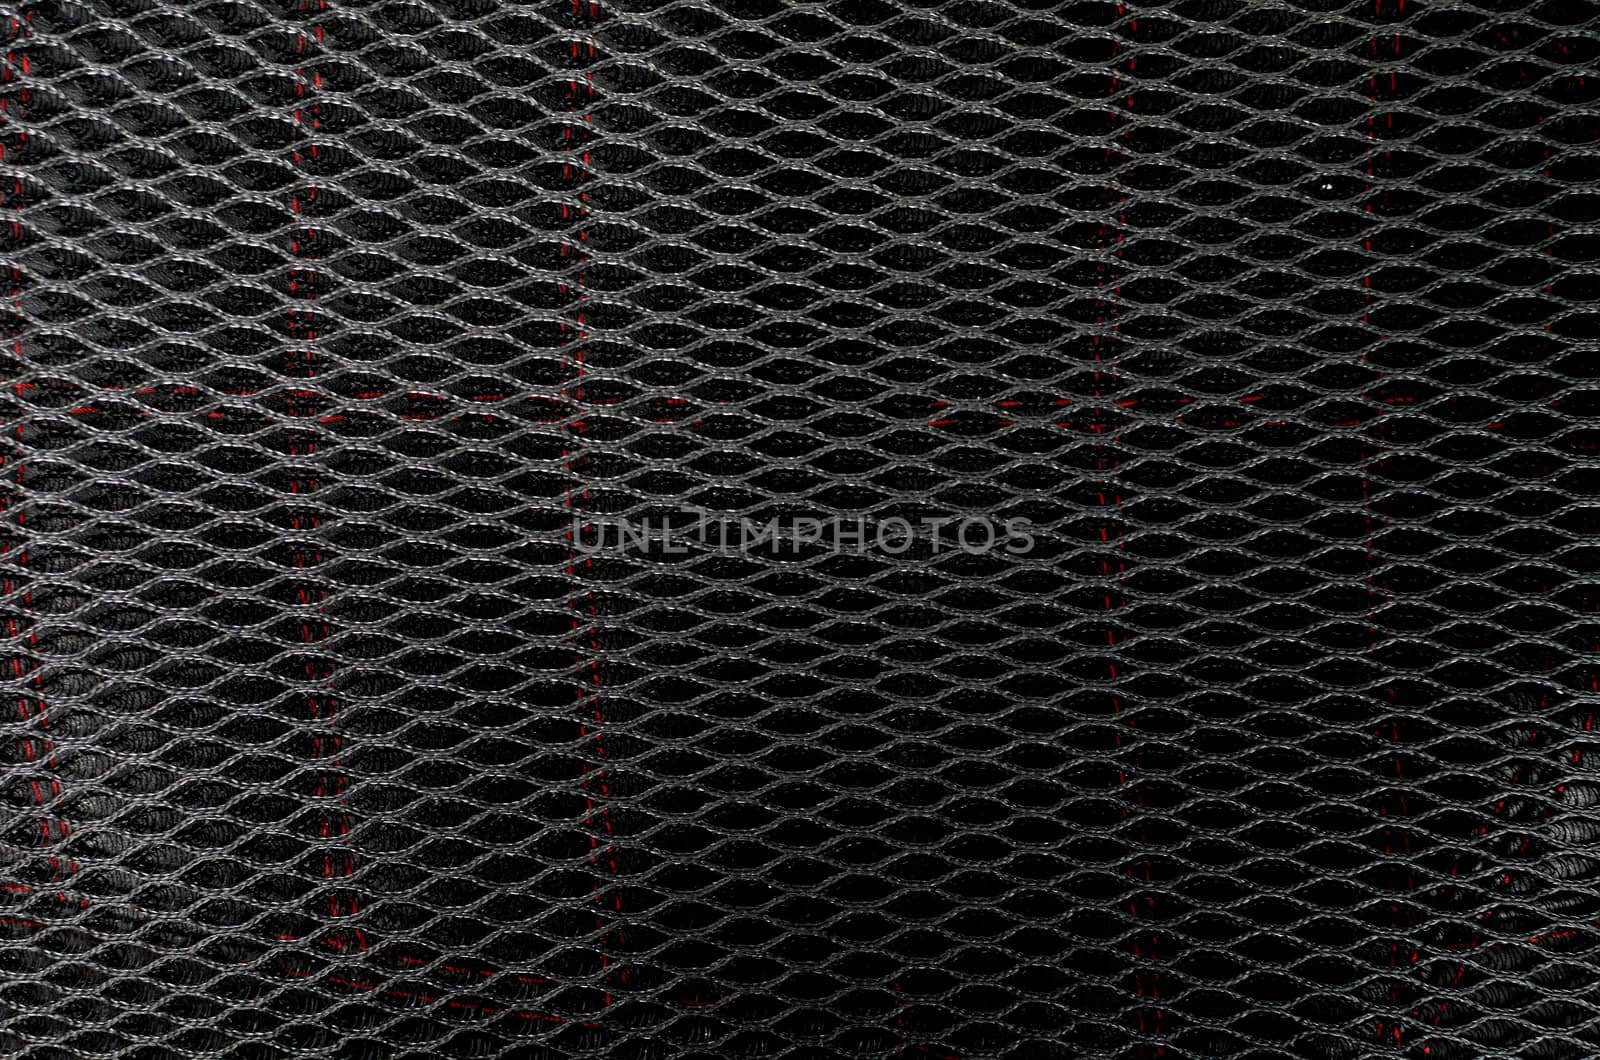 Fabric pattern background, Motorbike seat detail